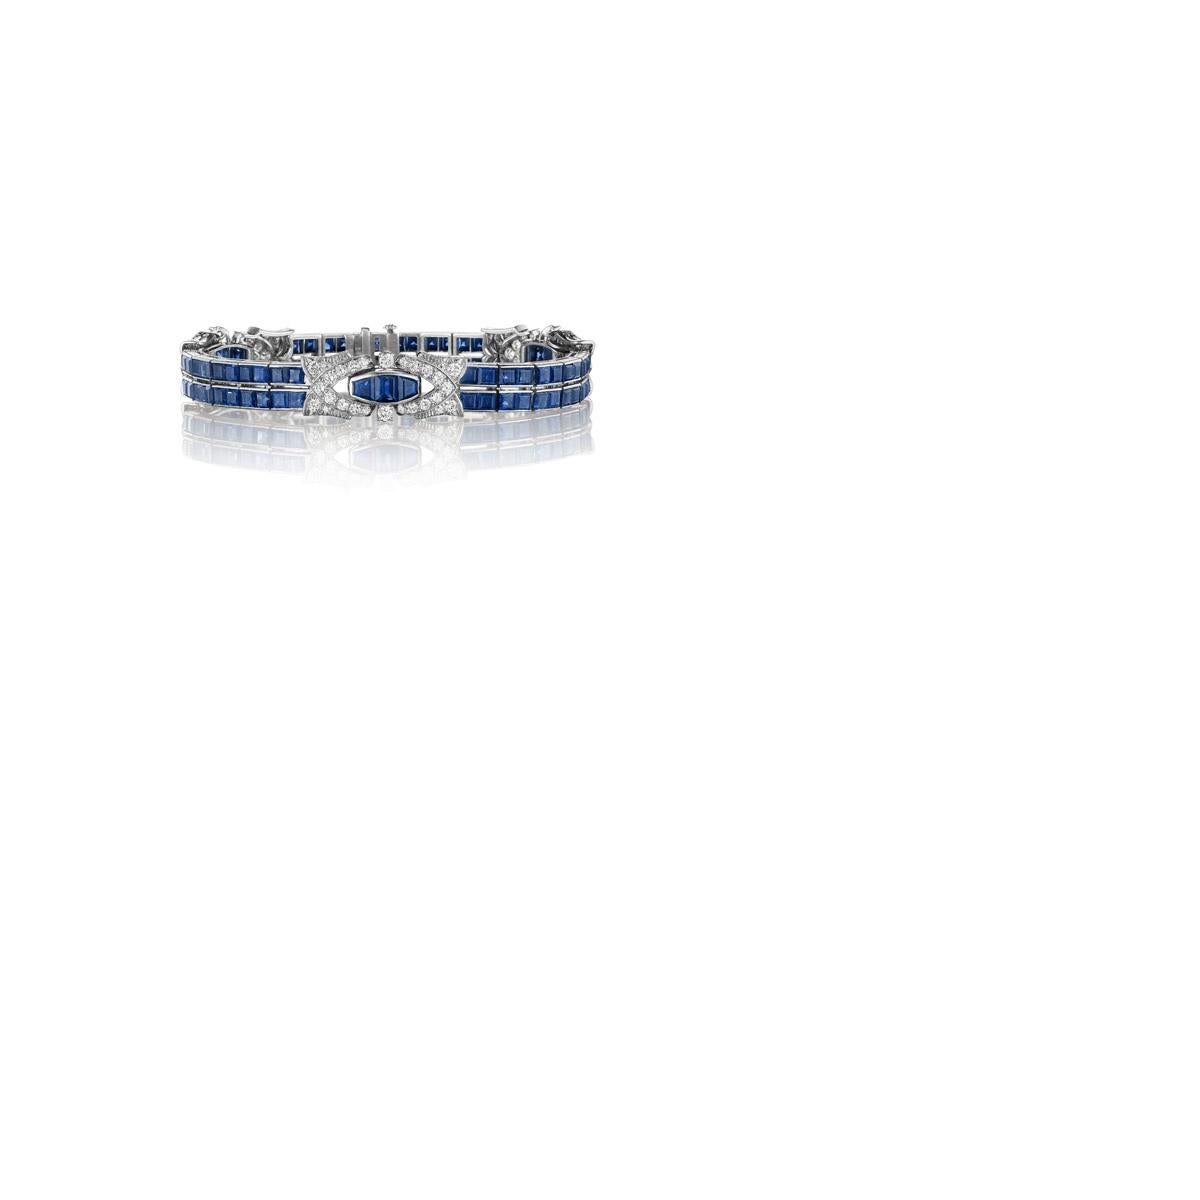 Pair of Oscar Heyman Art Deco Sapphire and Diamond Bracelets 1